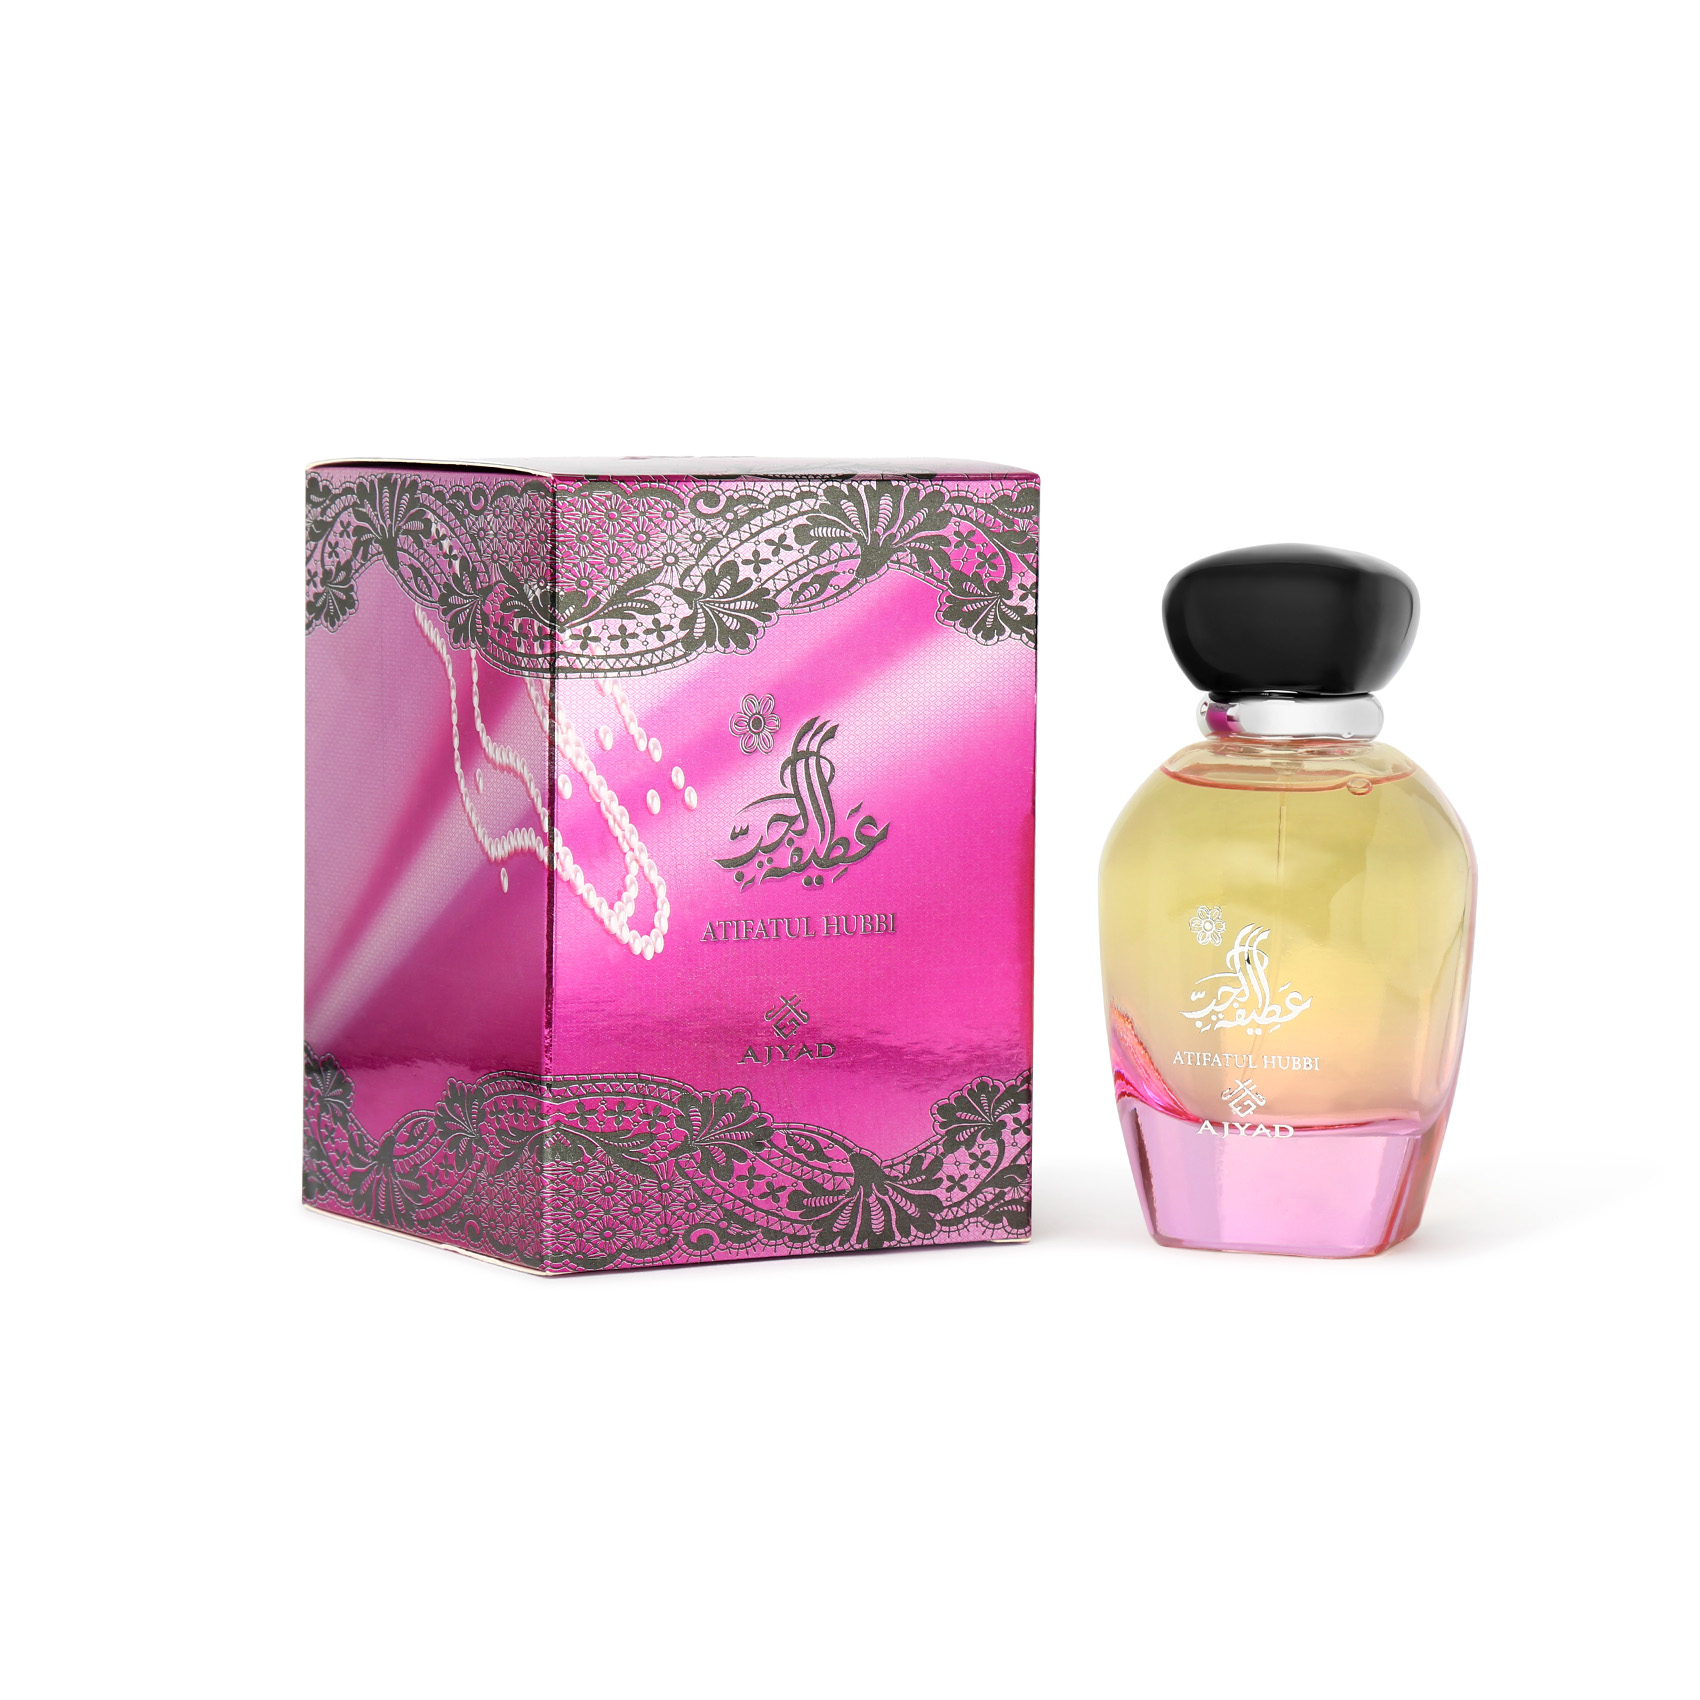 Atifatul Hubbi Edp 100 ml Perfume For Women  Ajyad By Anfar 